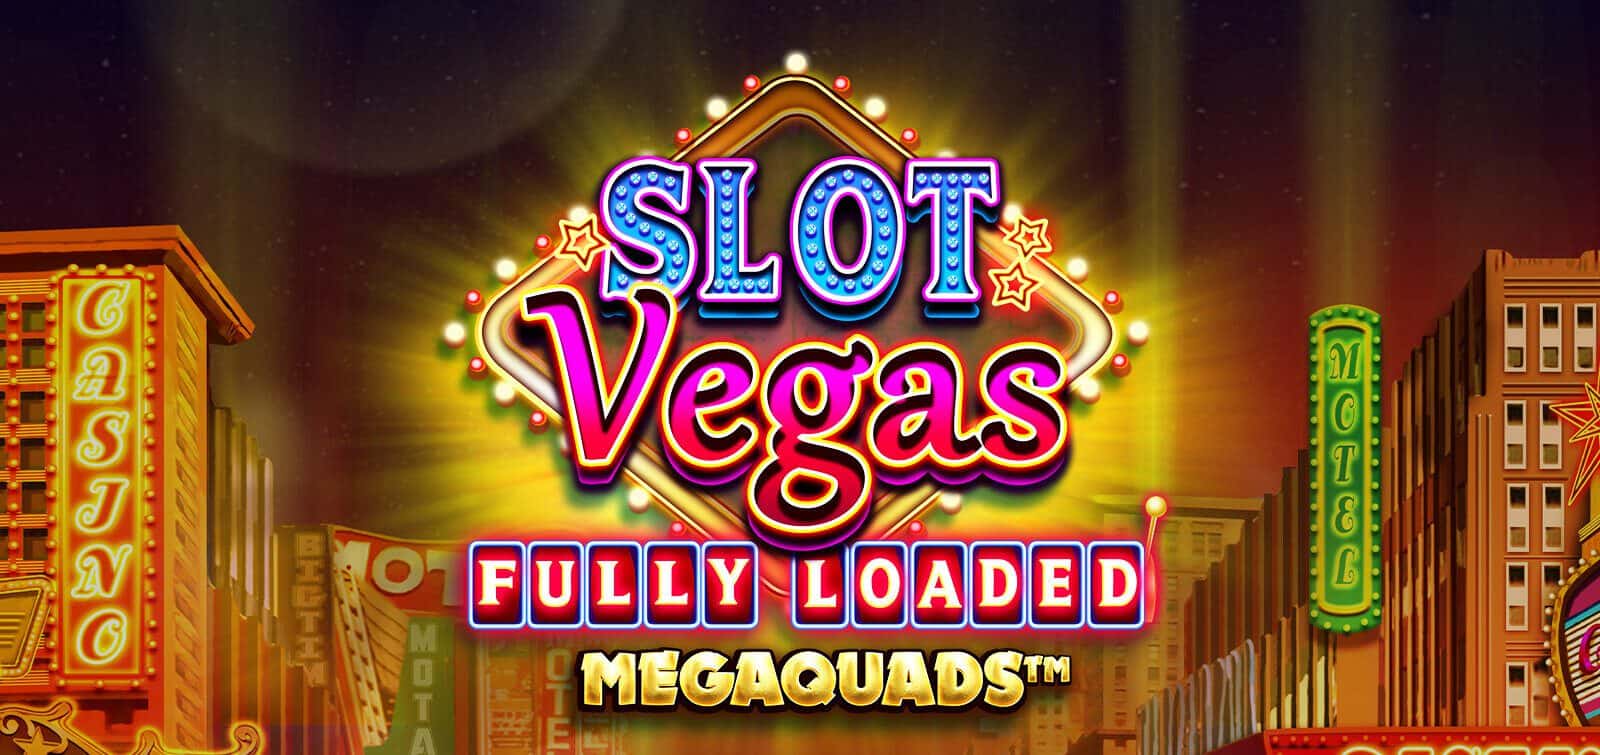 Slot Vegas Megaquads slot cover image